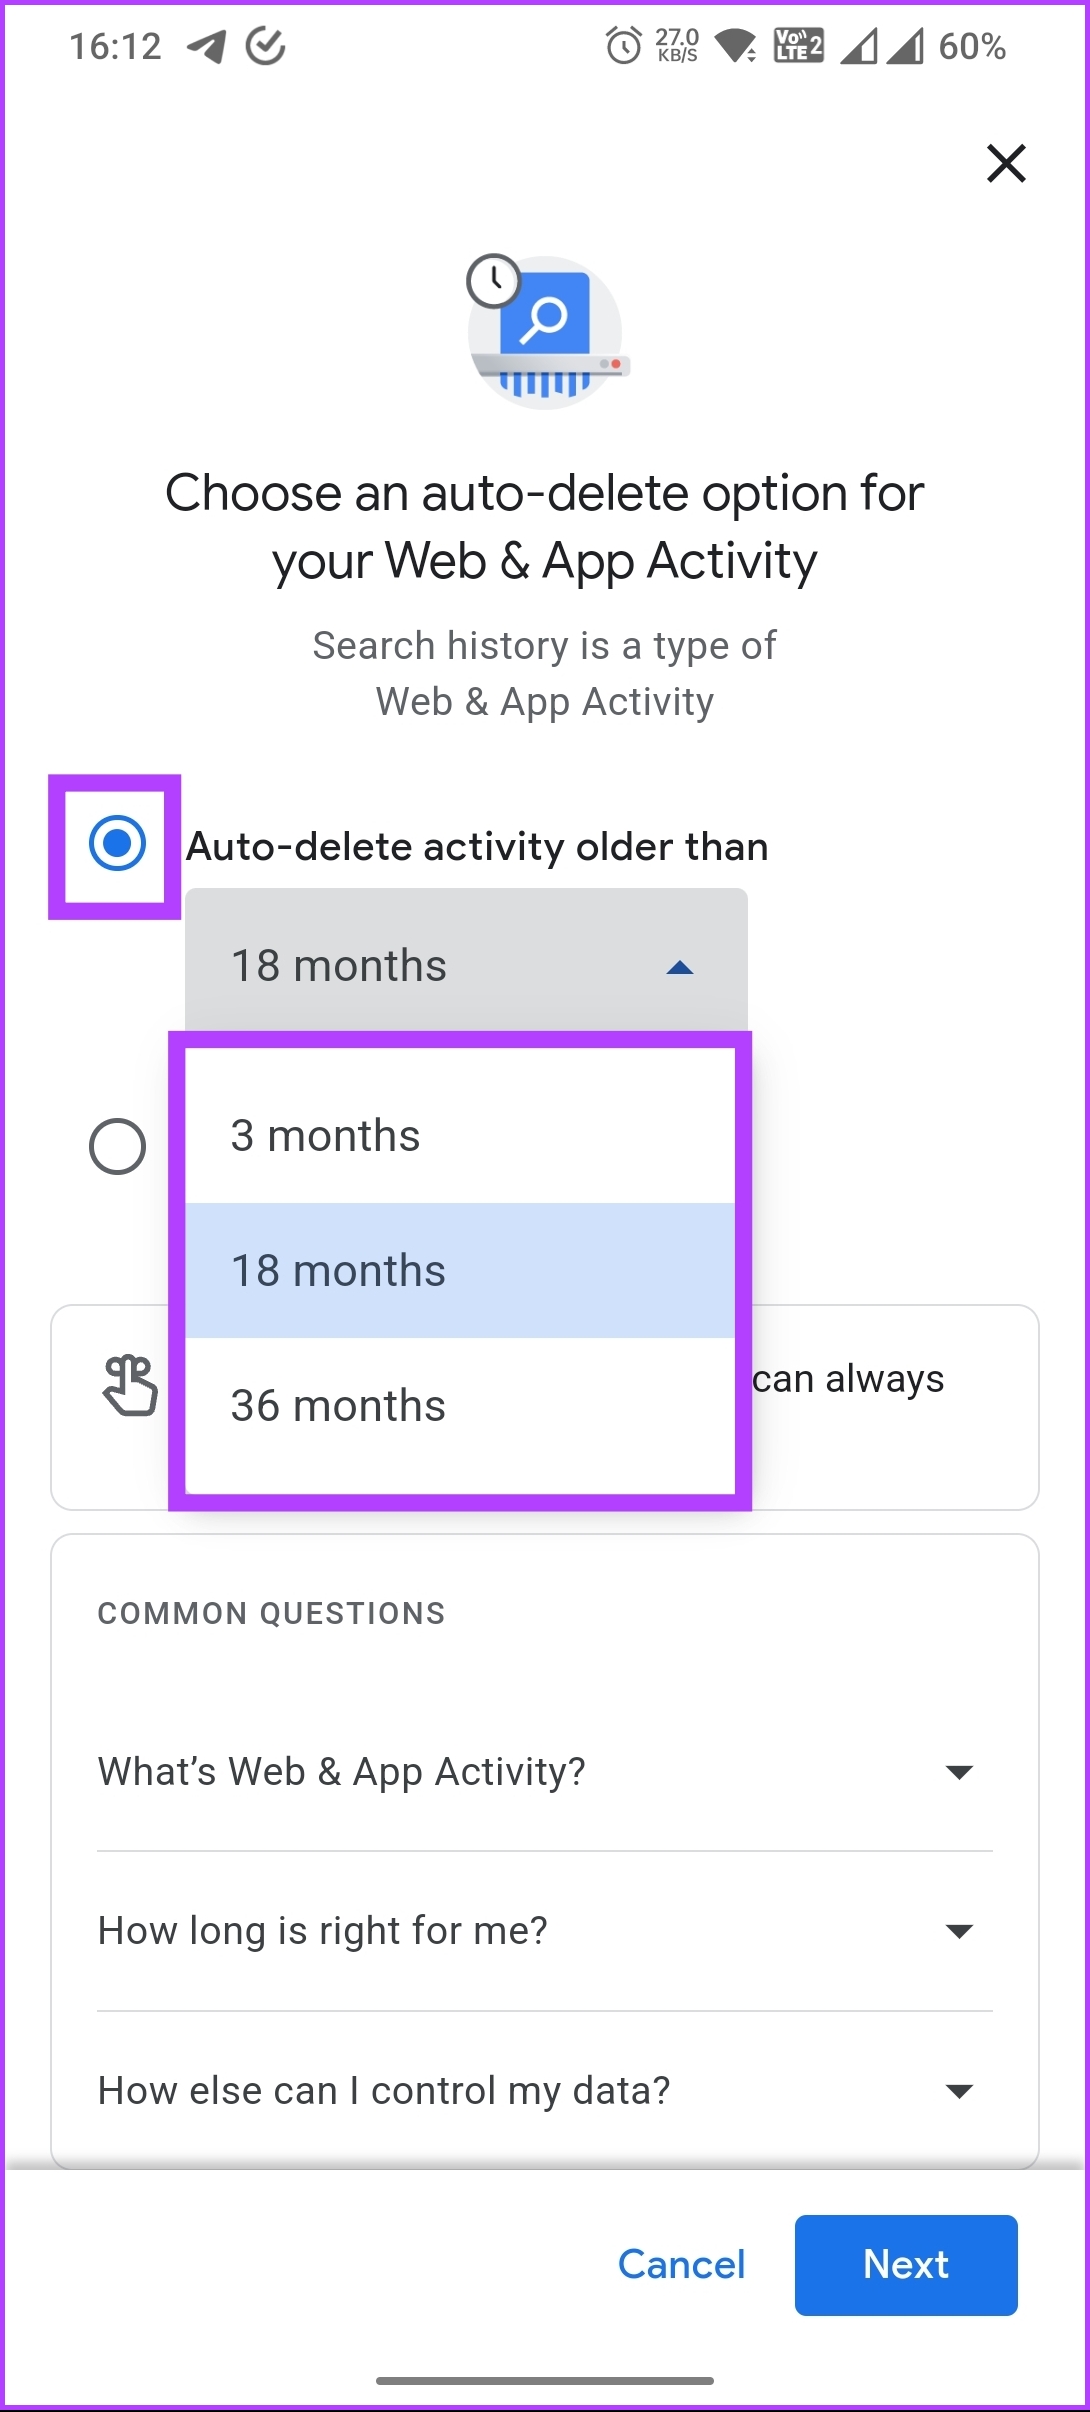 select 'Auto-delete activity older than'